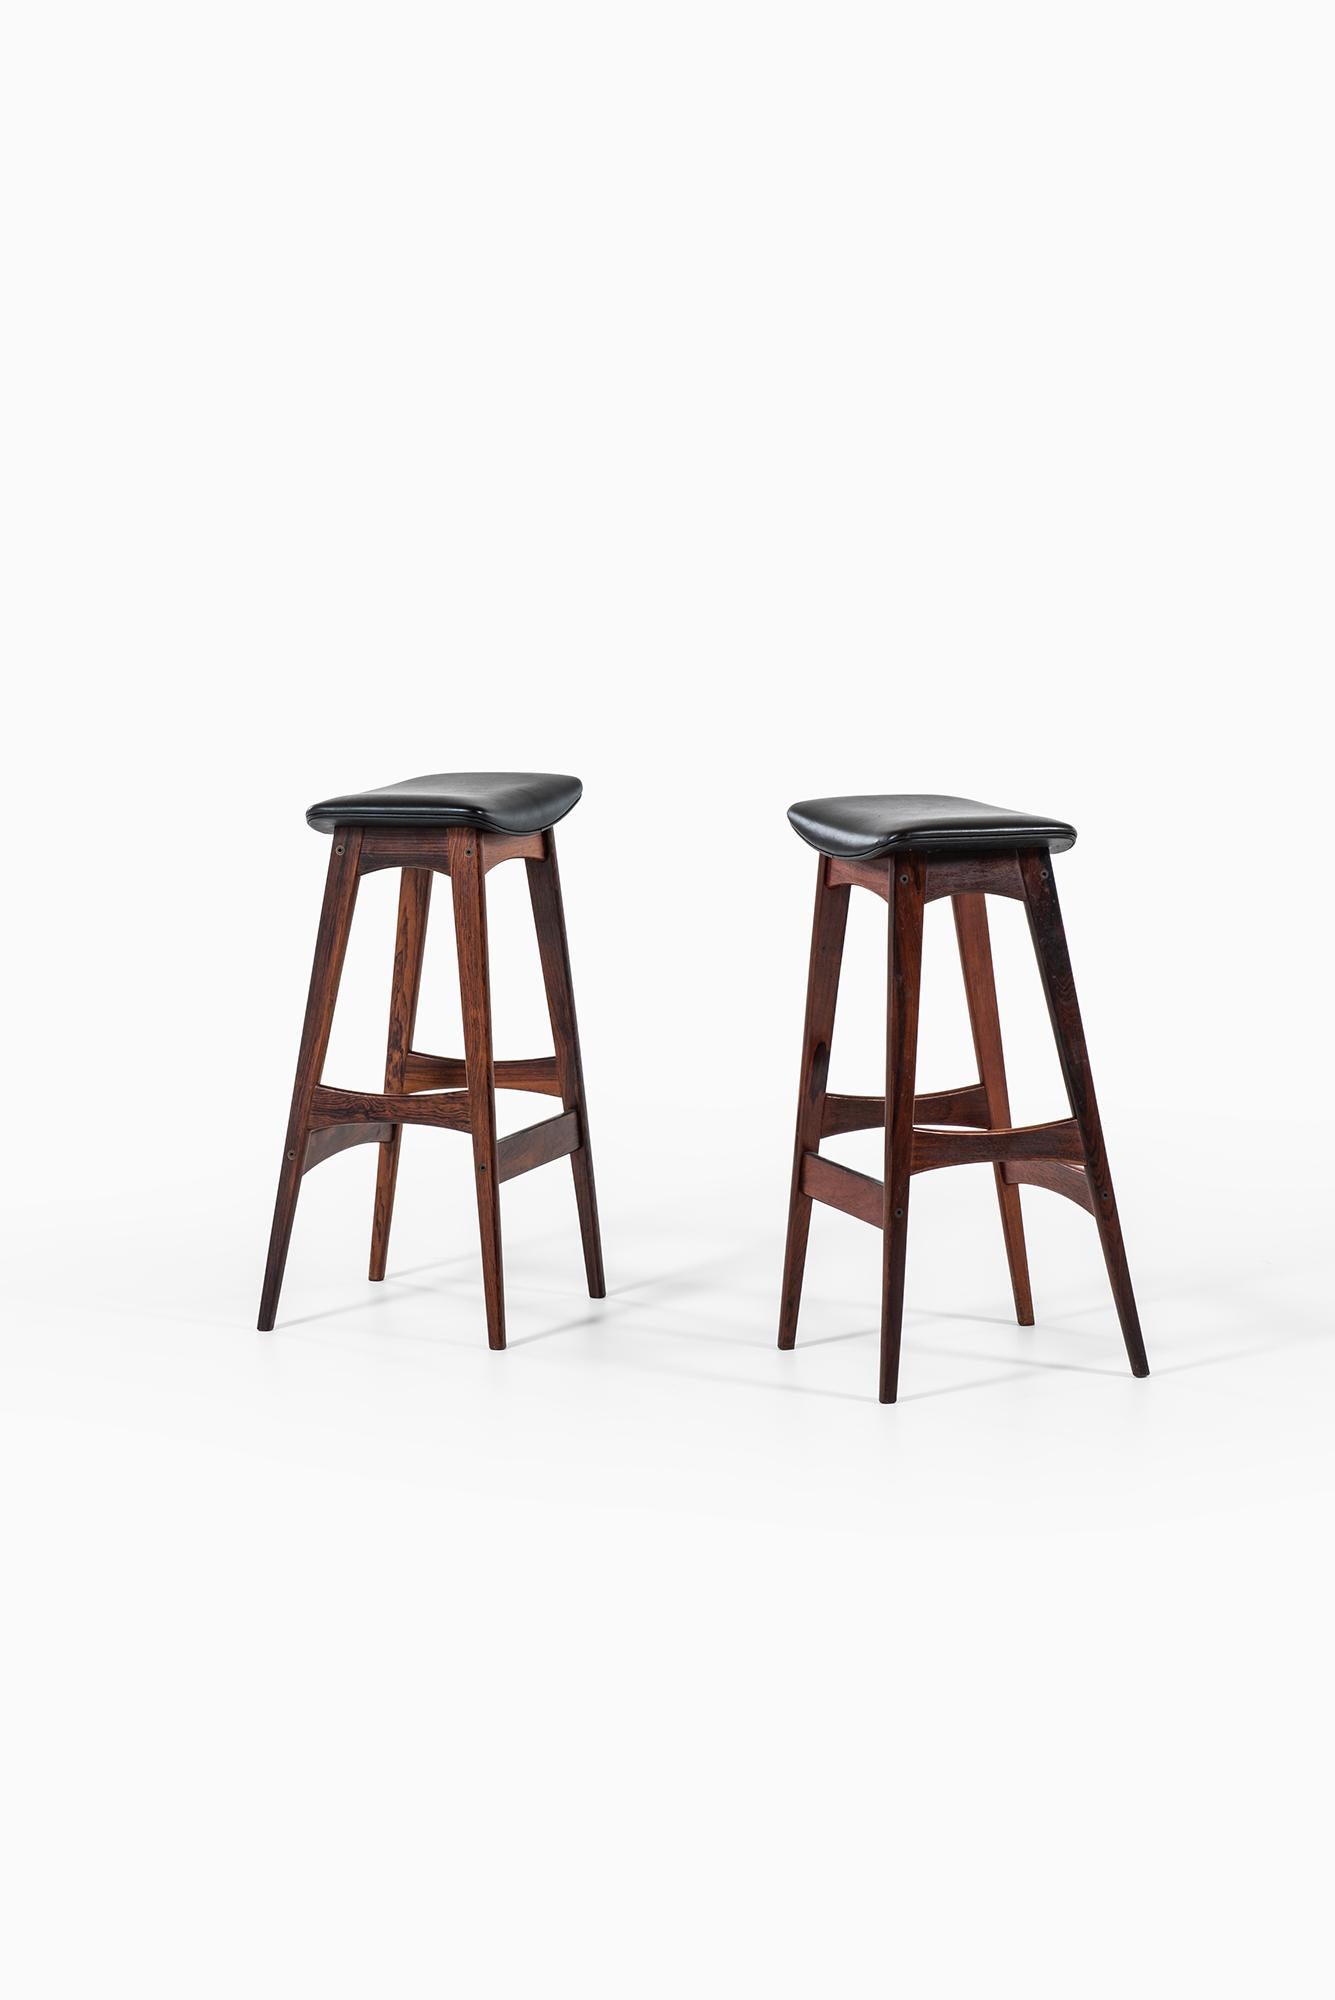 Pair of bar stools designed by Johannes Andersen. Produced by Brdr. Andersens Møbelfabrik A/S in Denmark.